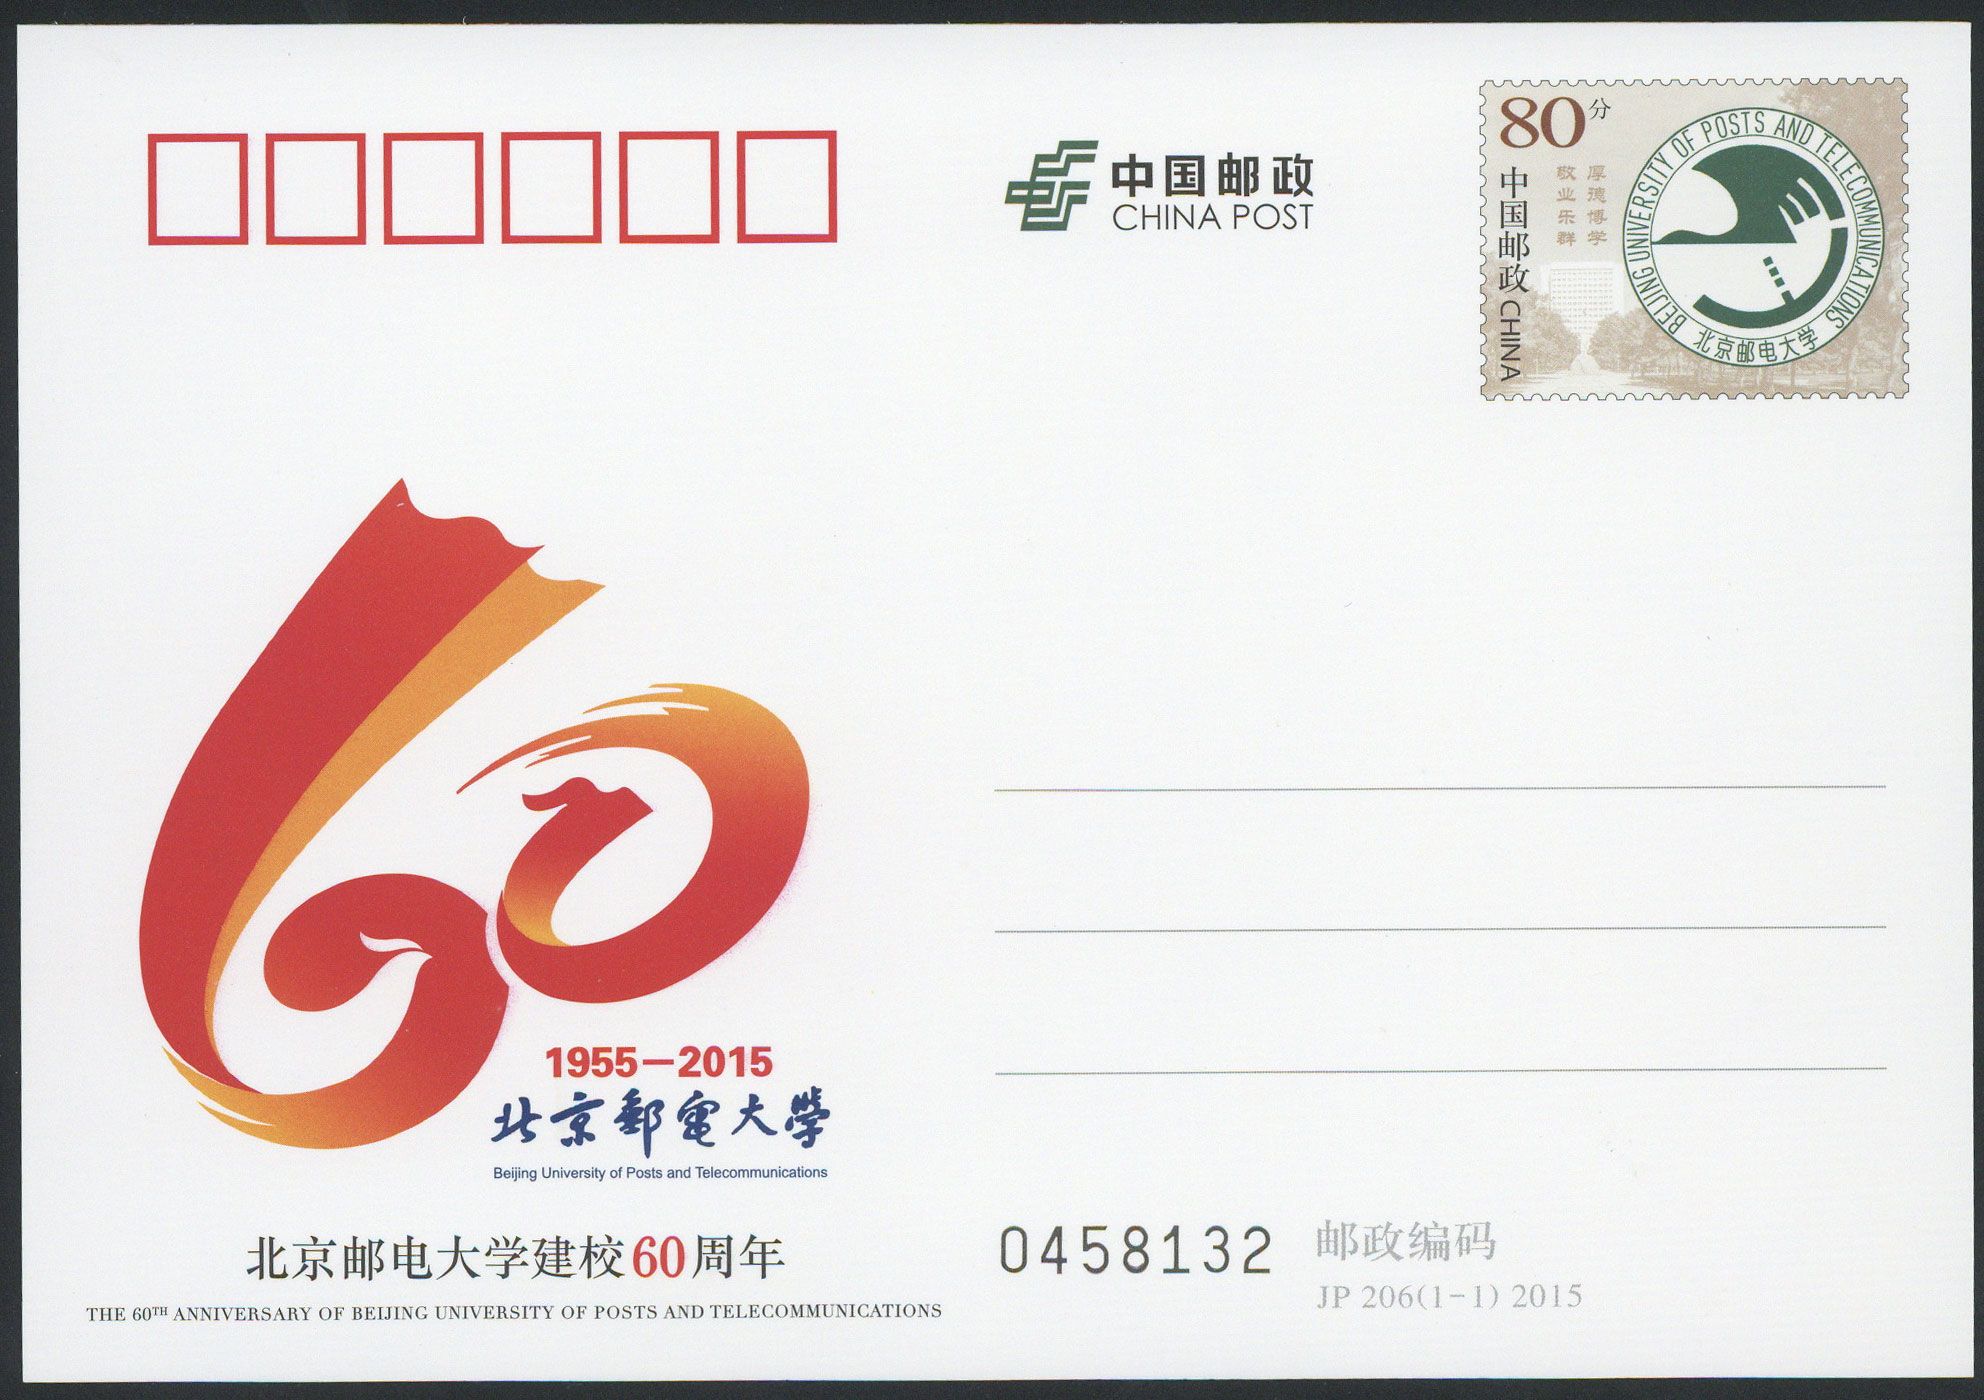 JP206 《北京邮电大学建校60周年》纪念邮资